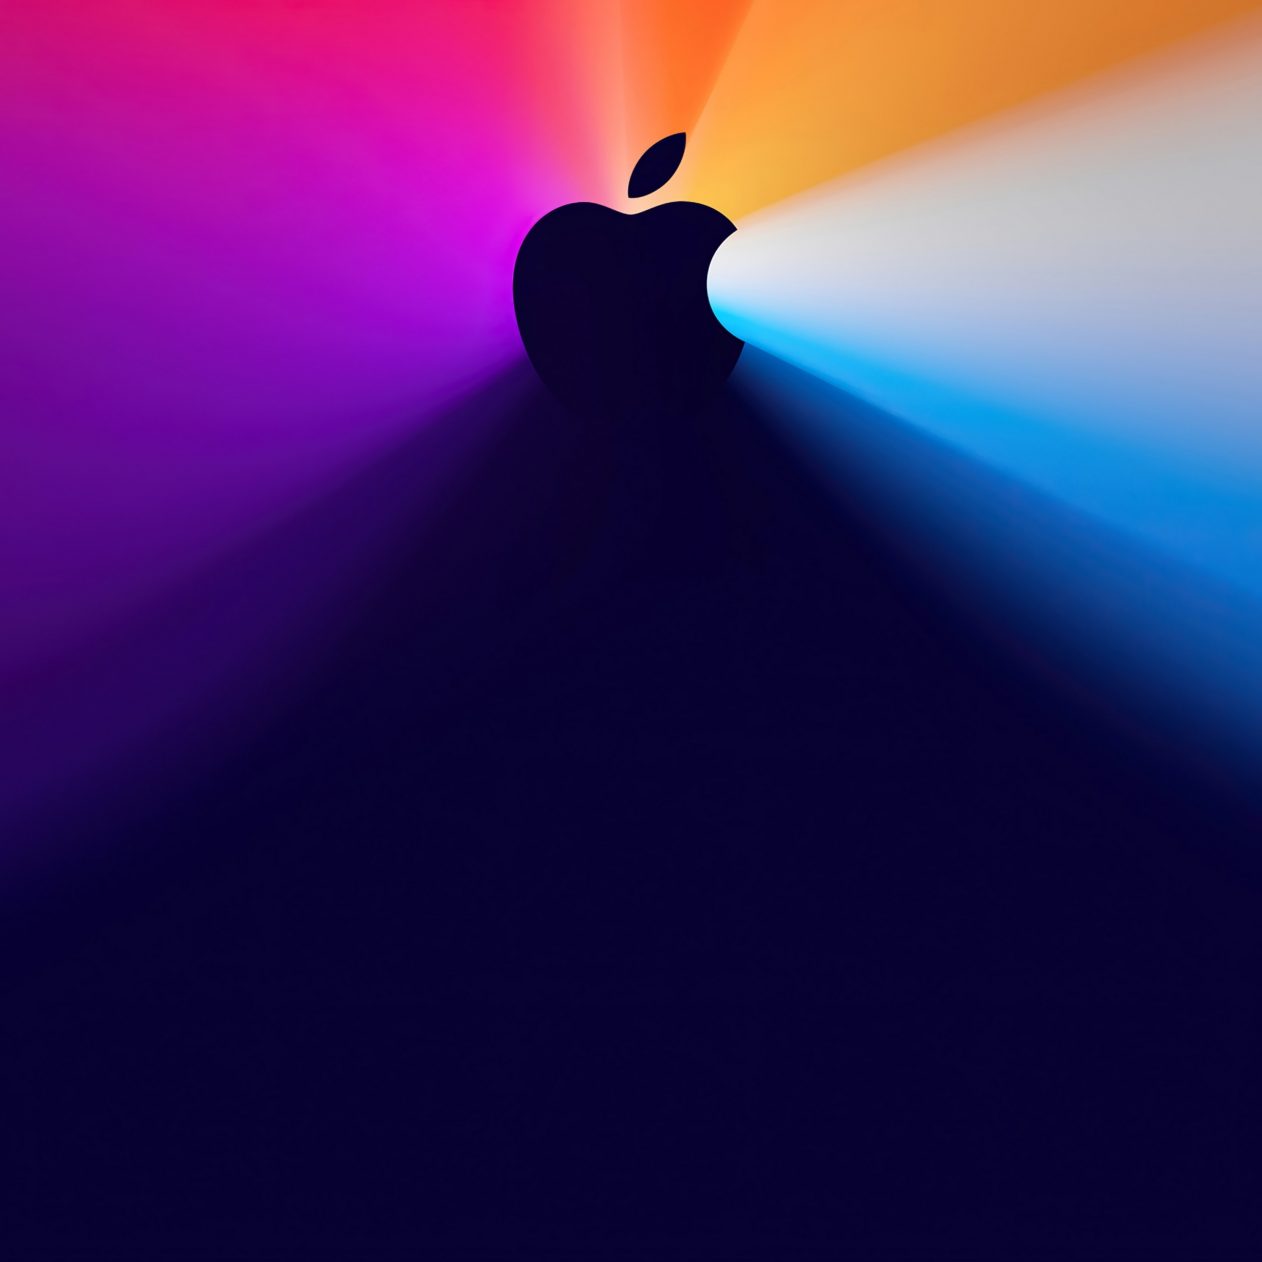 1262x1262 Parallax wallpaper 4k Colourful iPhone 12 Apple Logo iPad Wallpaper 1262x1262 pixels resolution